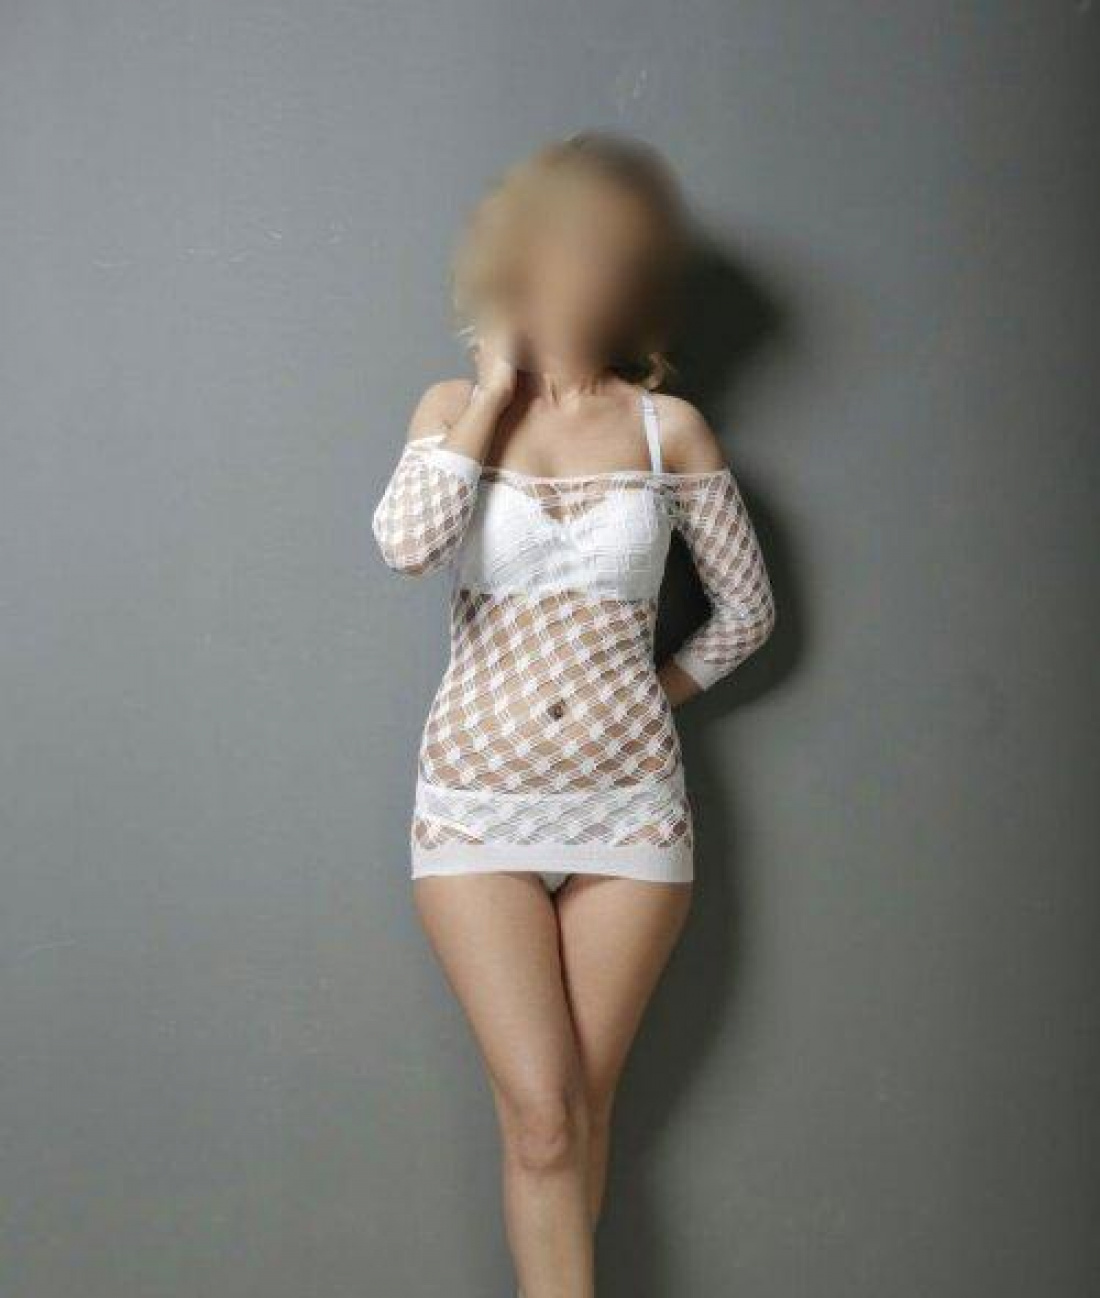 Света: проститутки индивидуалки в Казани